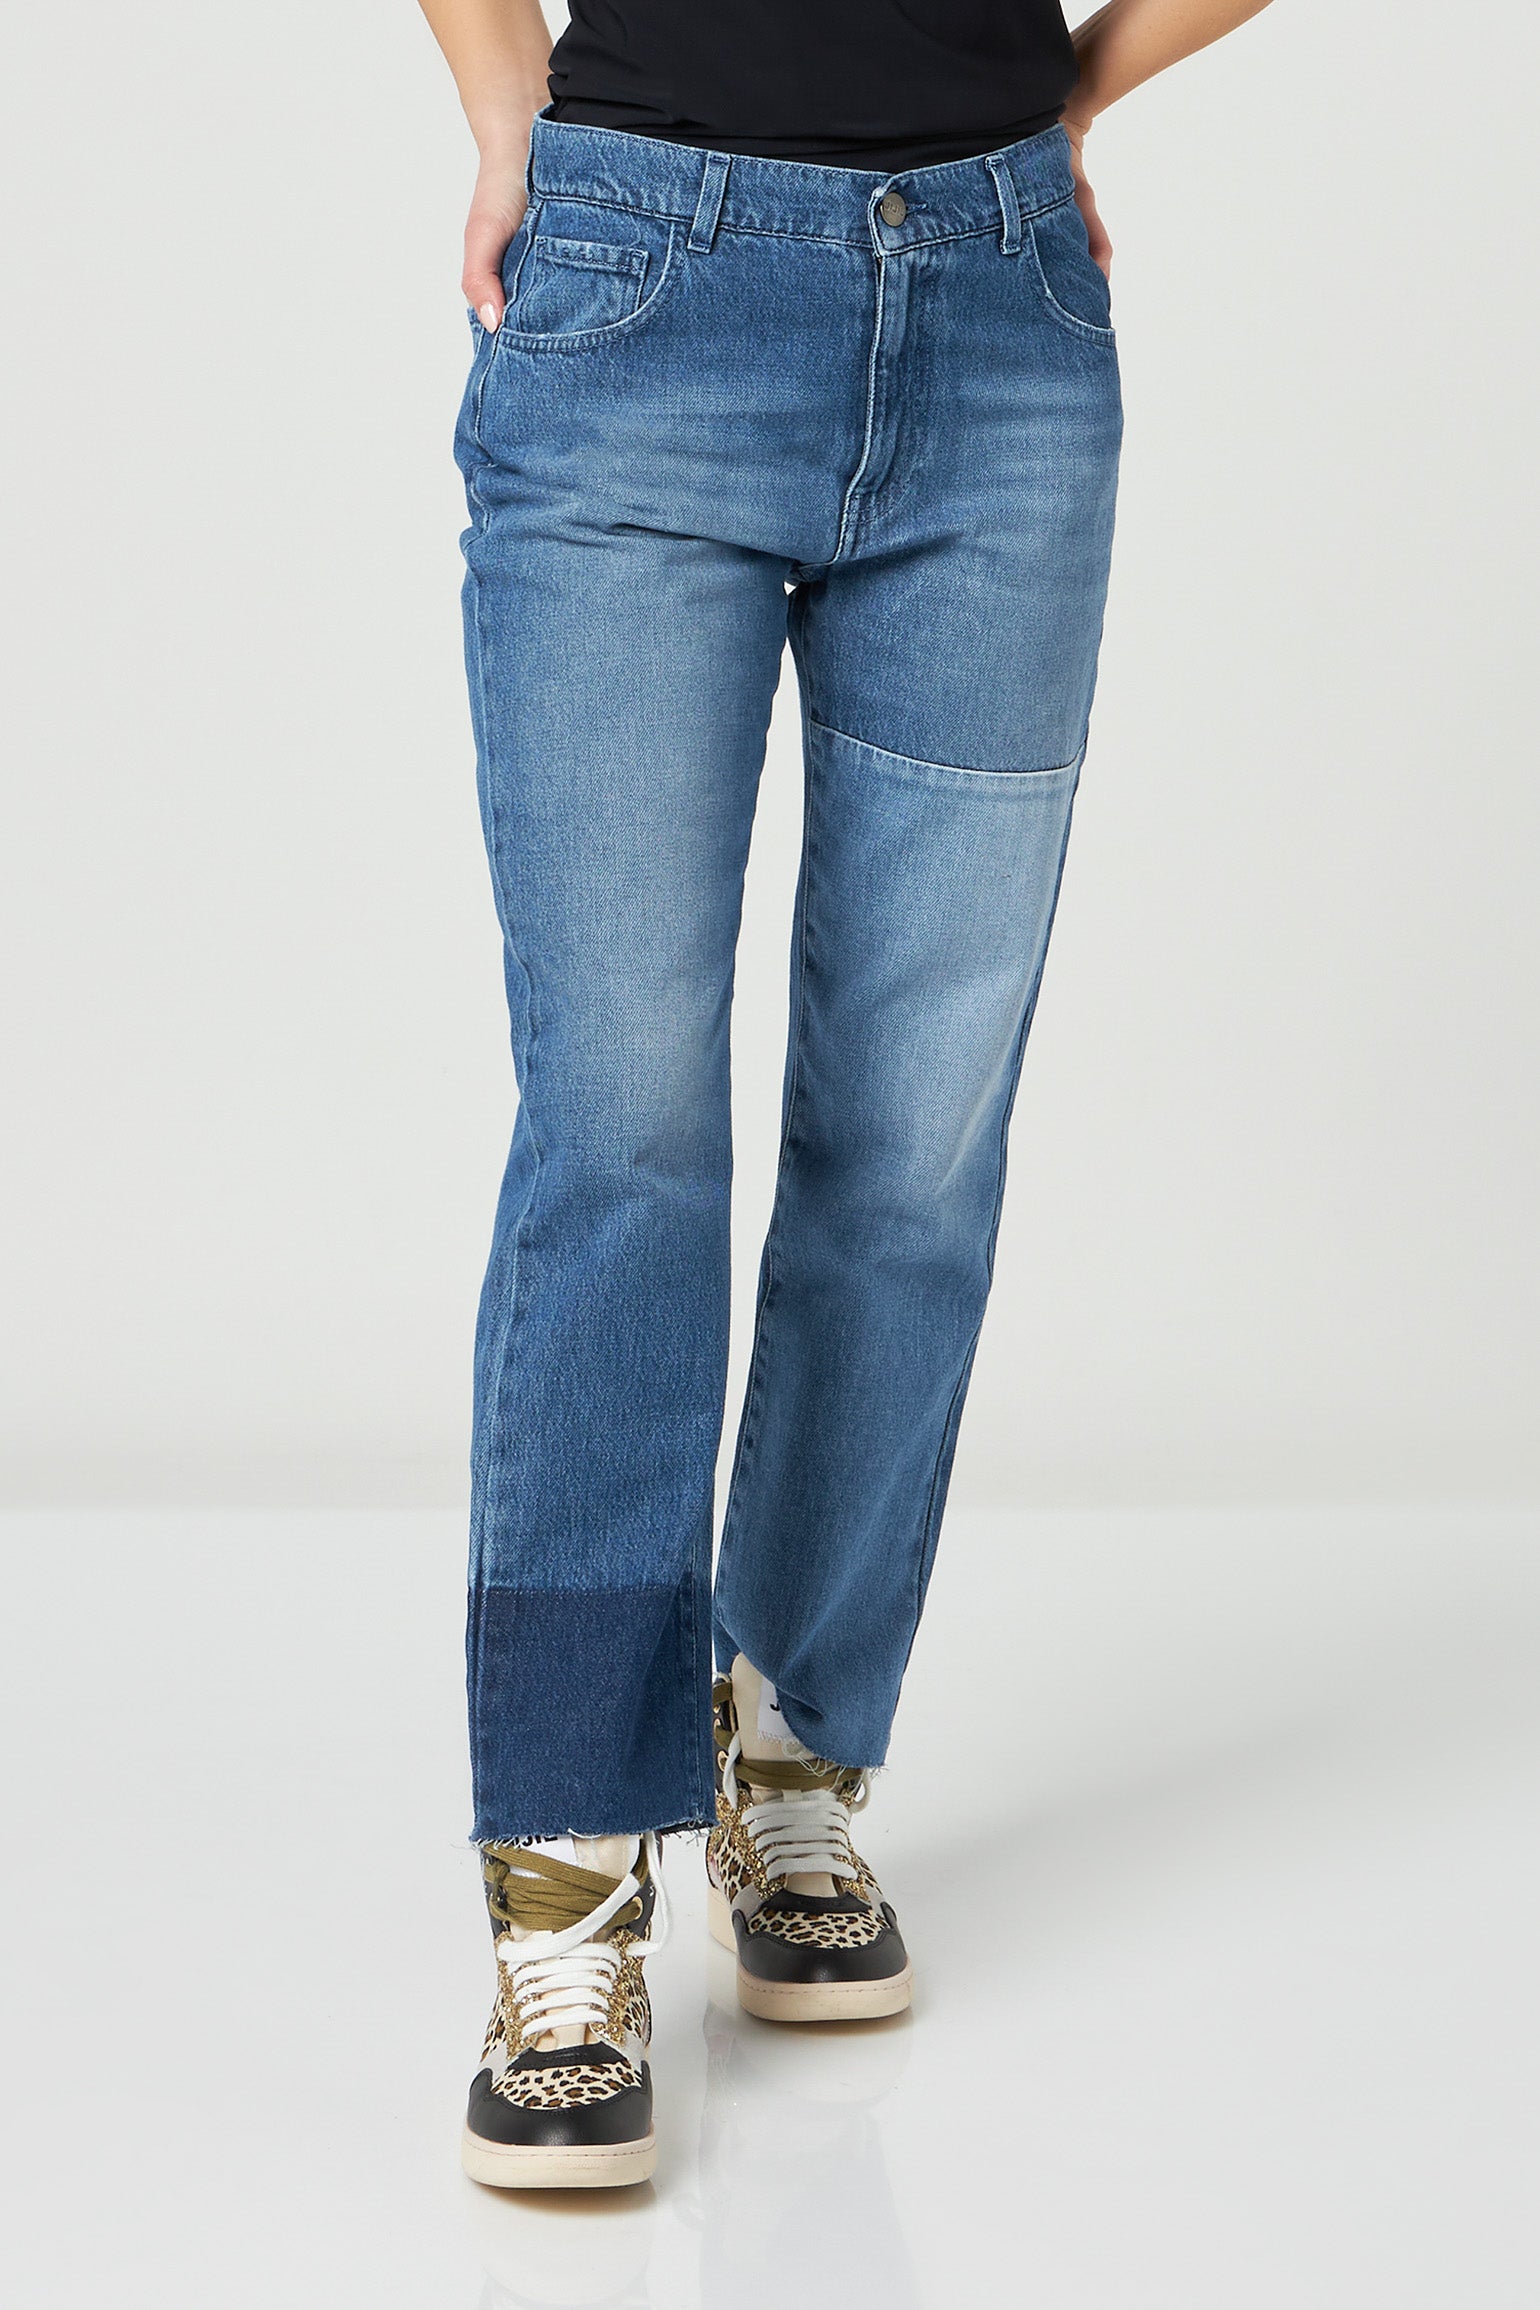 JIJIL Jeans Regular Waist Bicolor